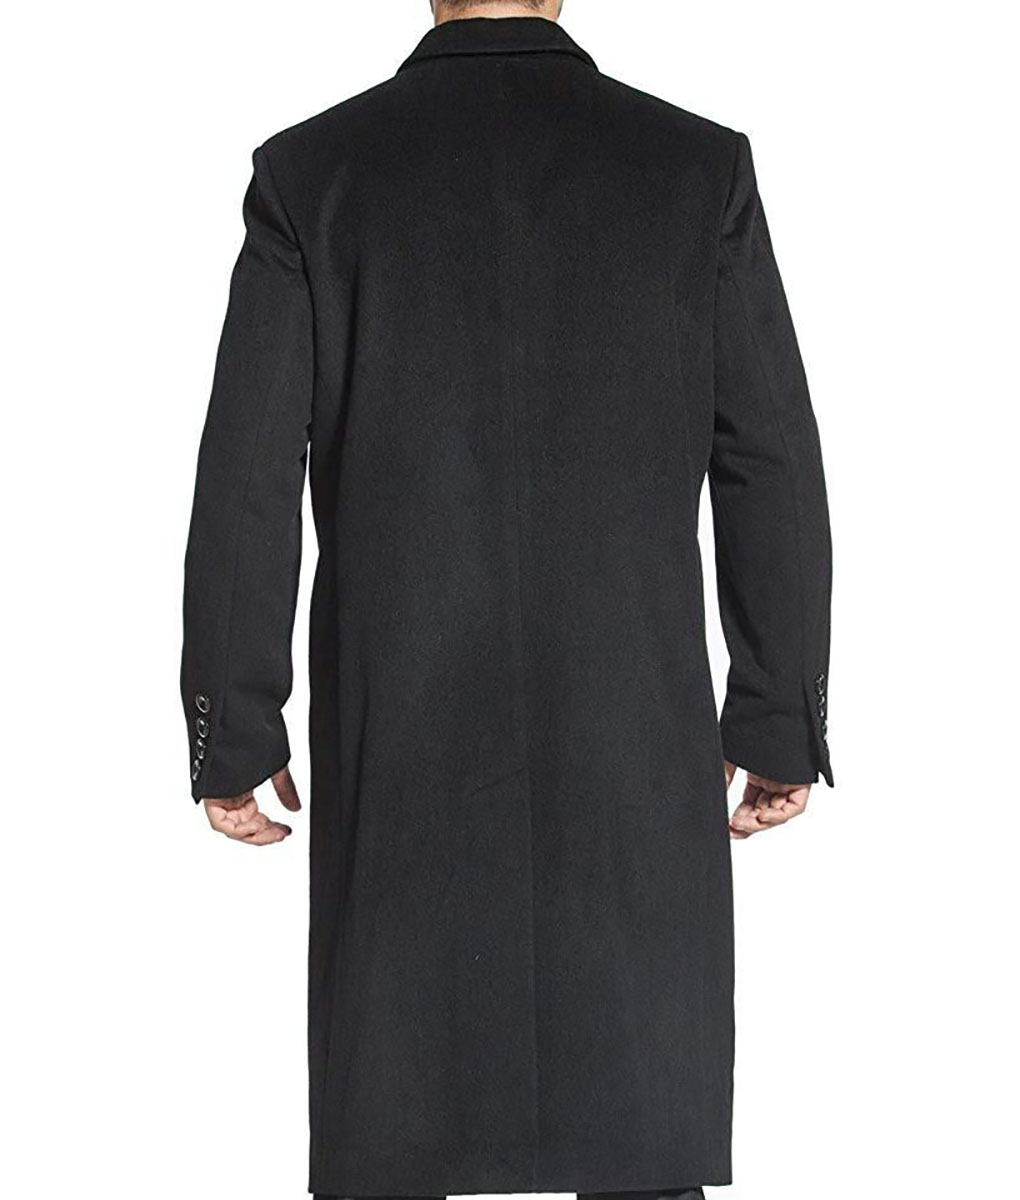 Anderson Mens Black Wool Long Coat